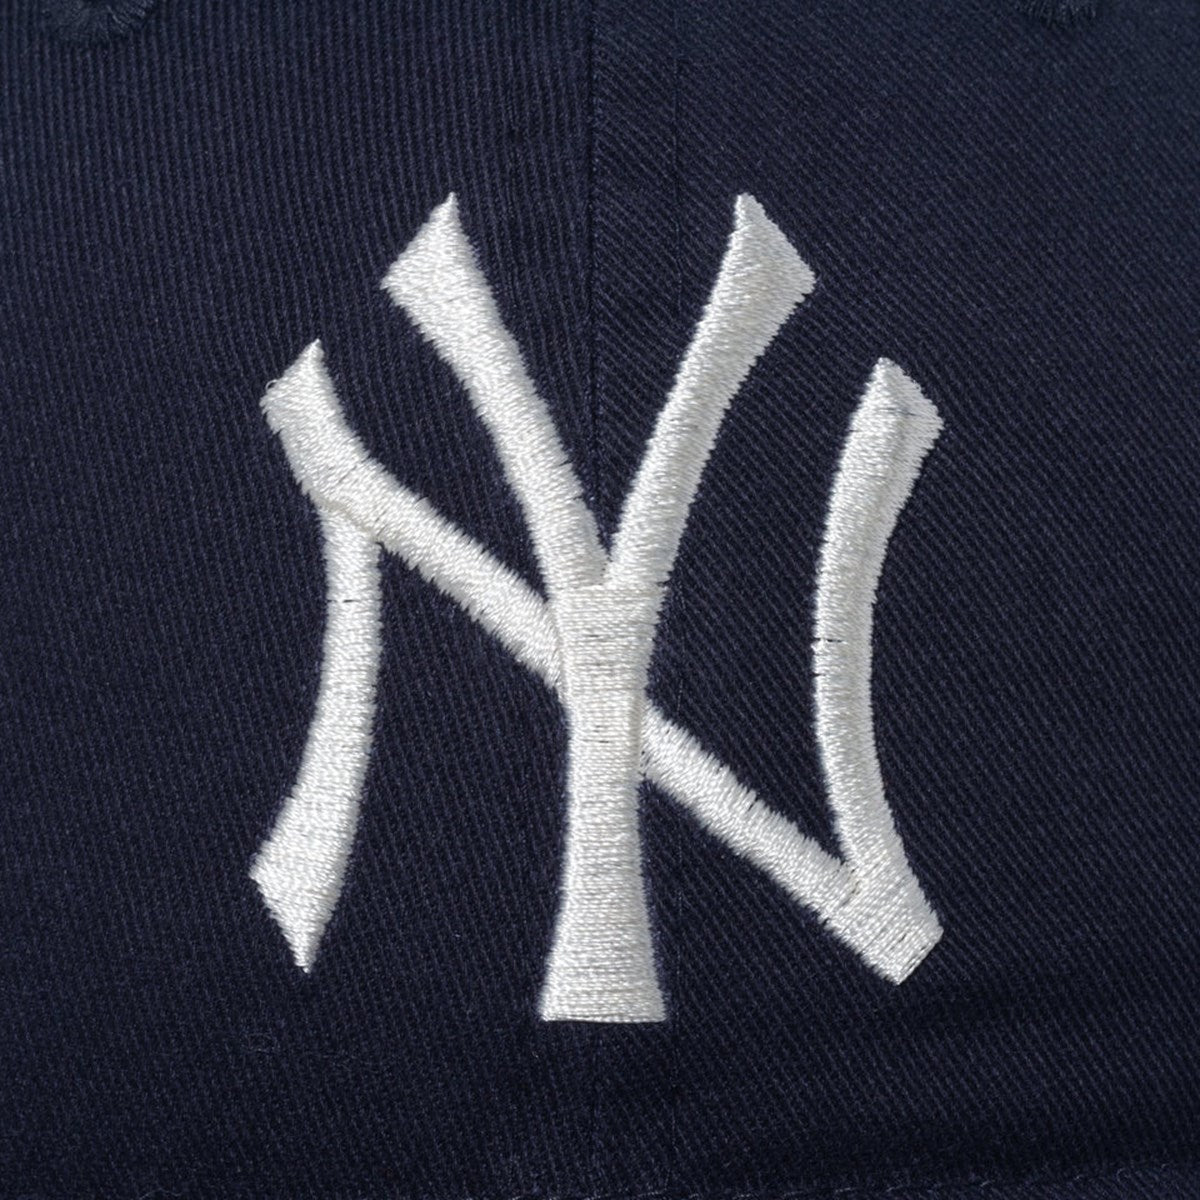 NEW ERA New York Yankees - 930 NEYYAN VISOR LOGO NVY【14109762】